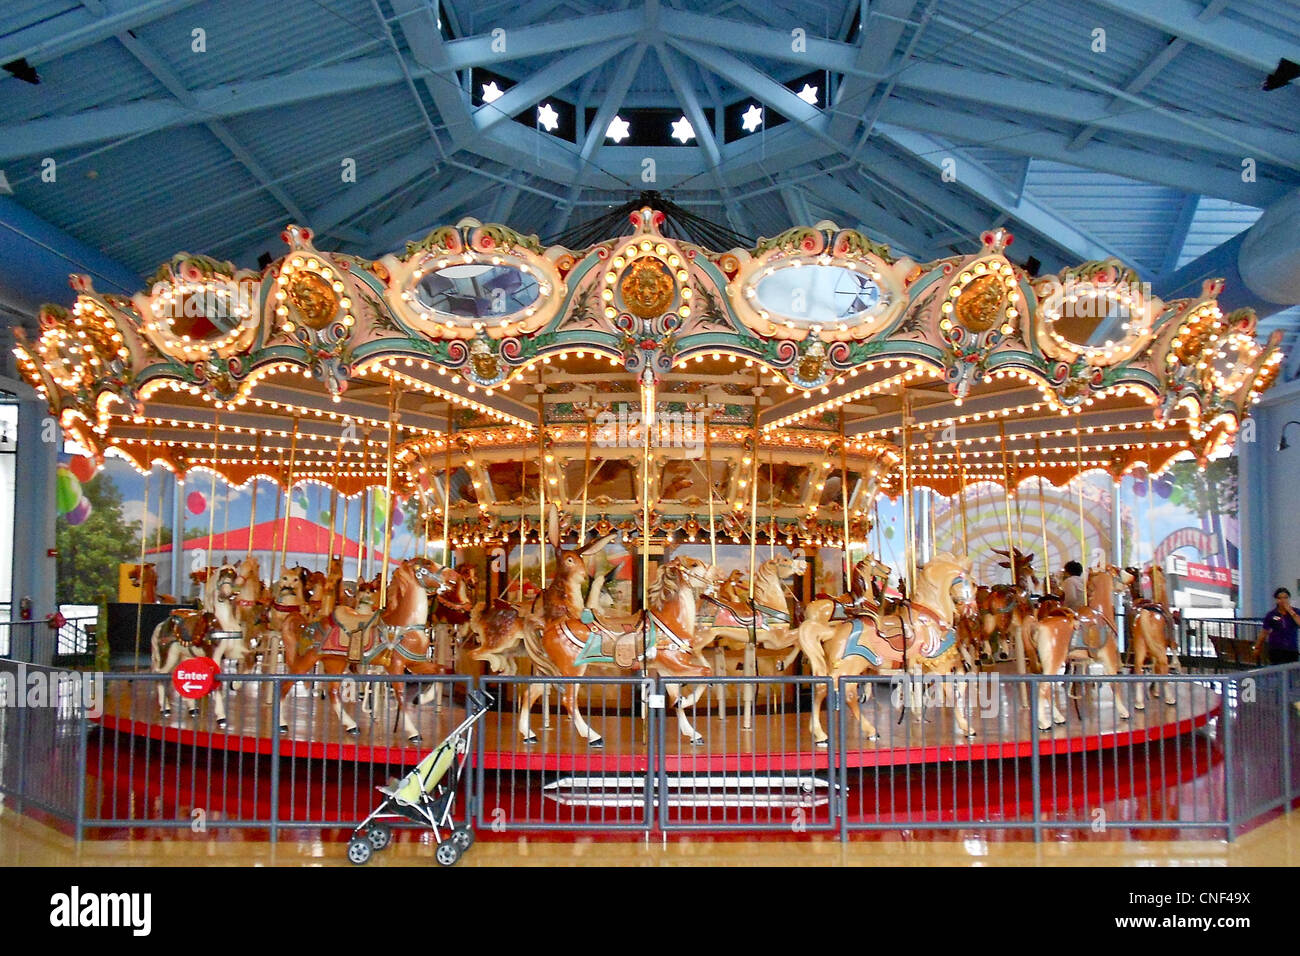 Dentzel Carousel at Please Touch Museum in Philadelphia. Stock Photo